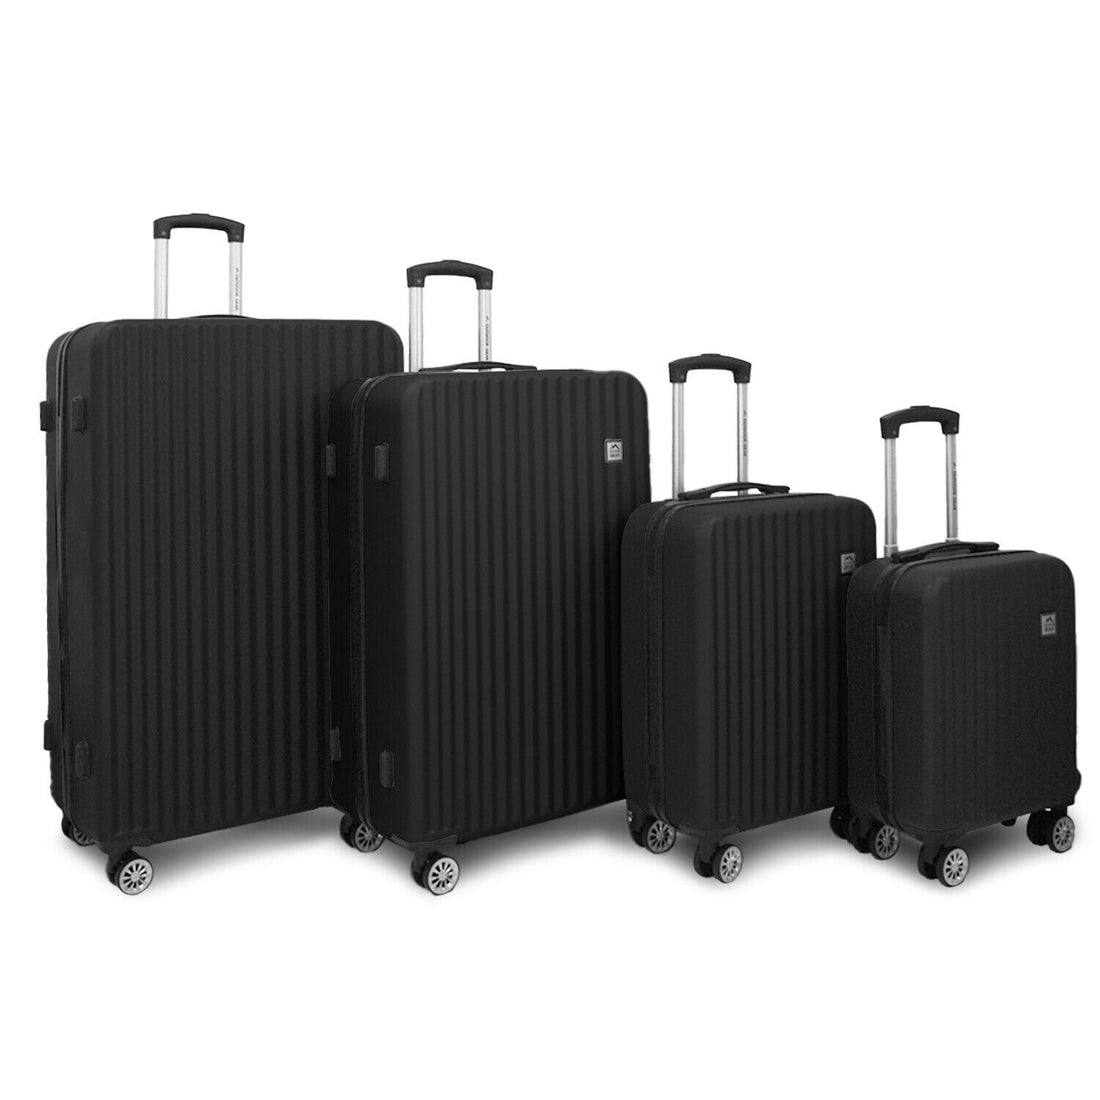 Hard Shell Black Classic Suitcase 8 Wheel Luggage Bag